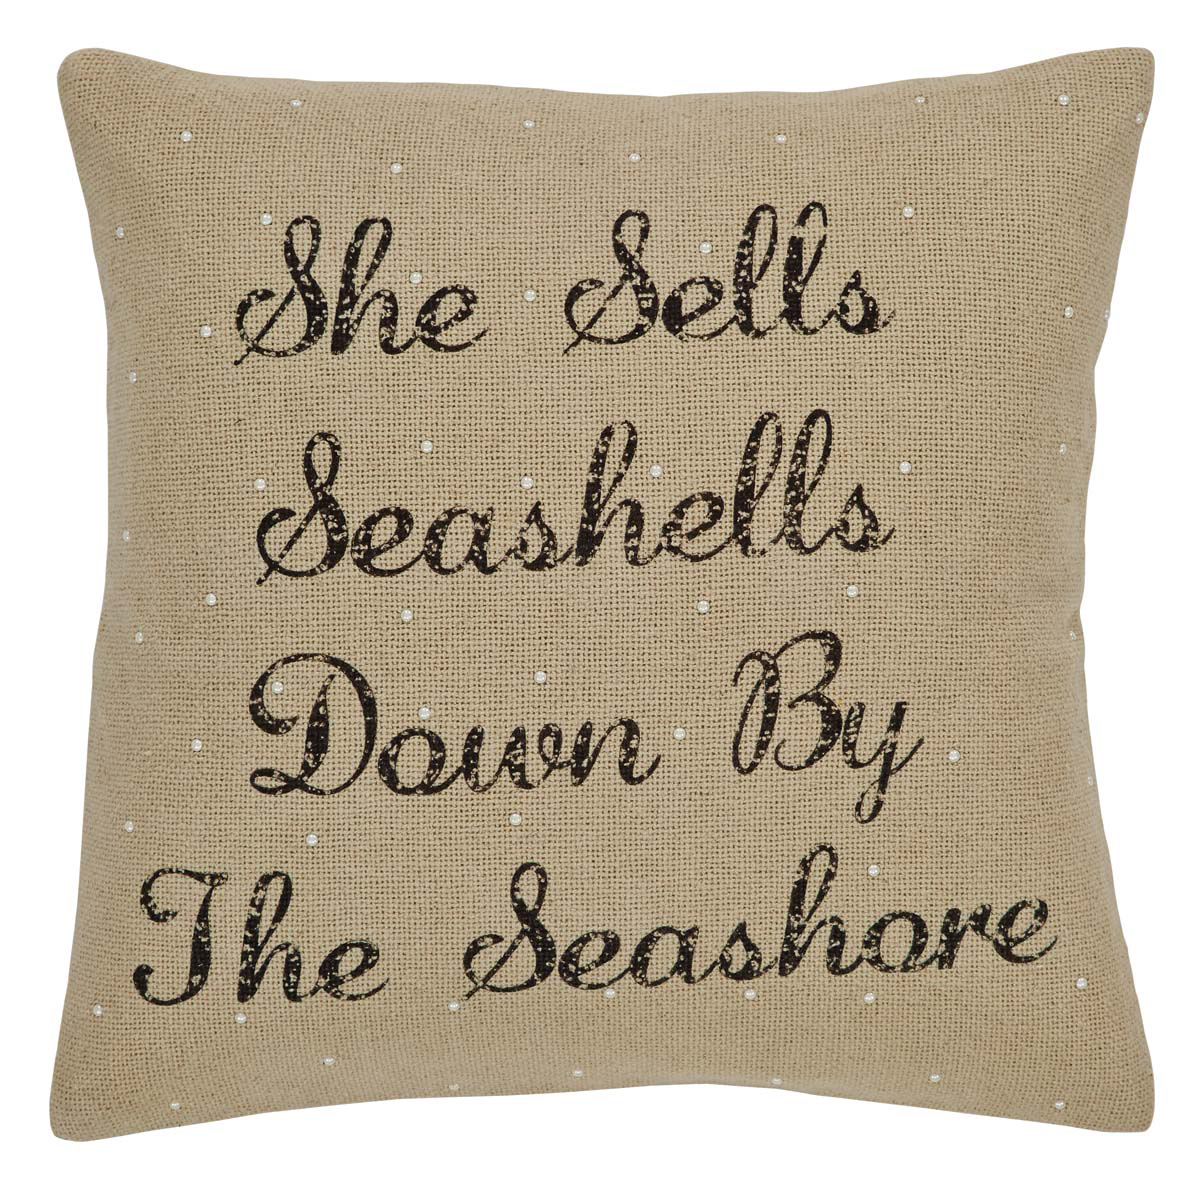 She Sells Seashells Pillow